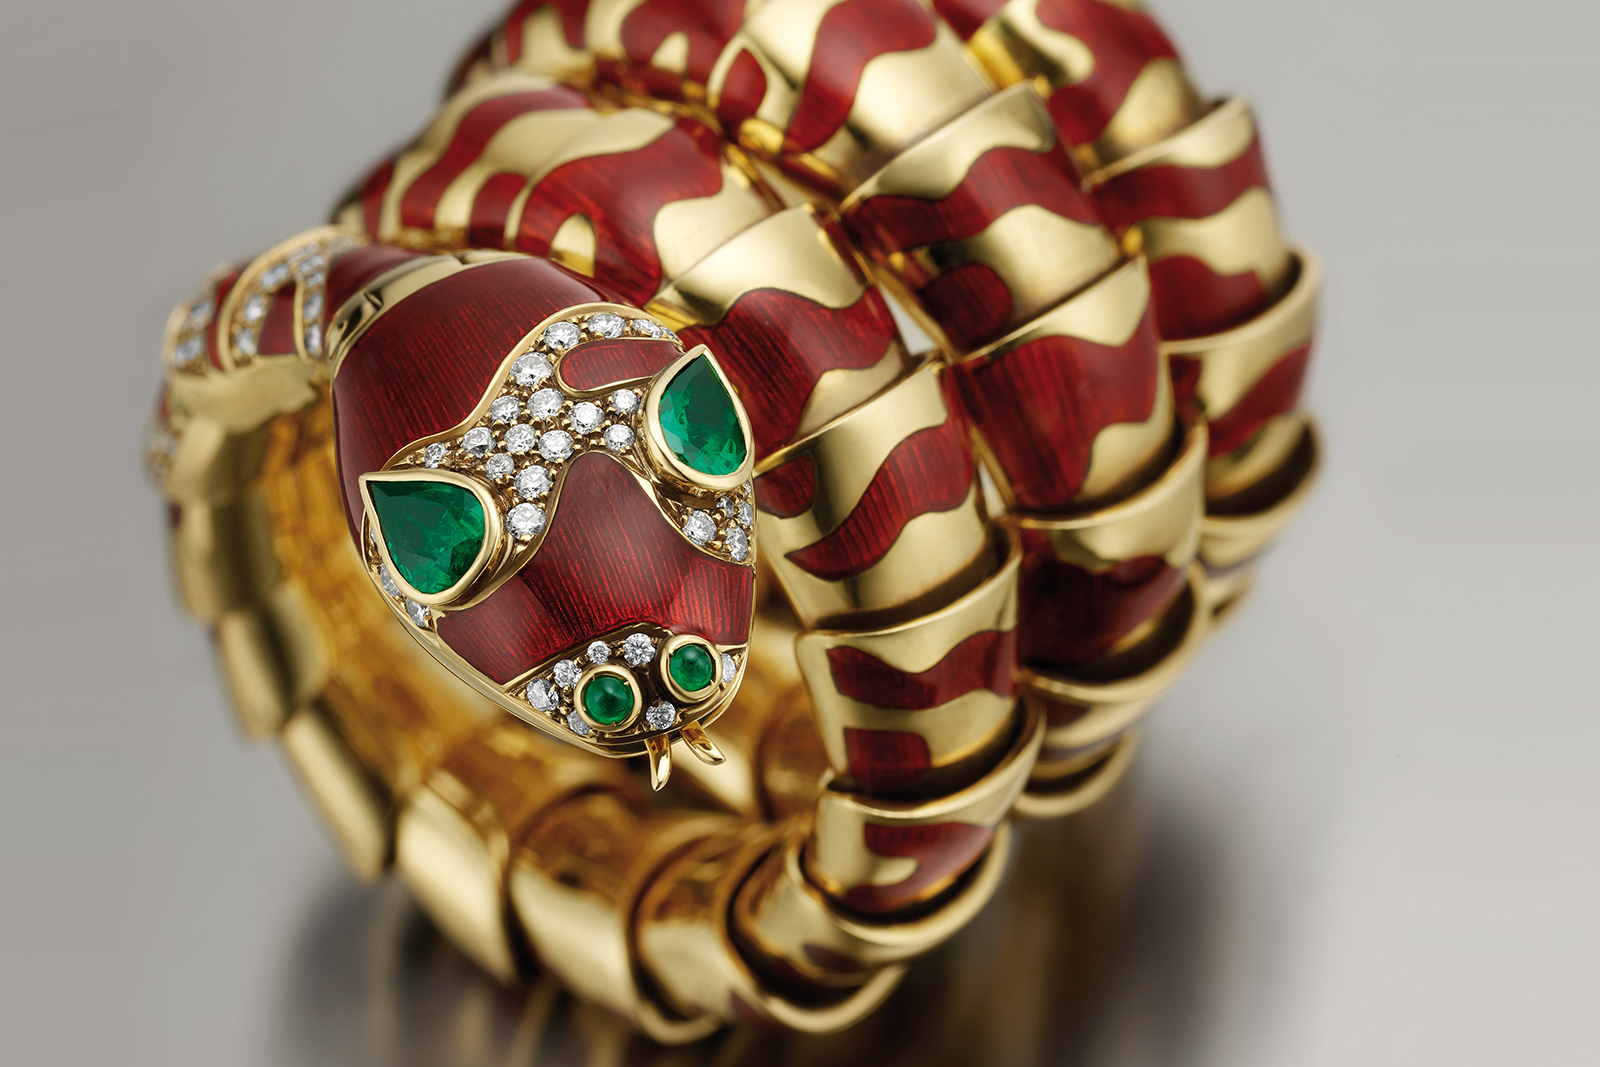 Bvlgari Heritage 'Serpenti' watch with diamonds, emeralds, guilloché enamel in 18k yellow gold